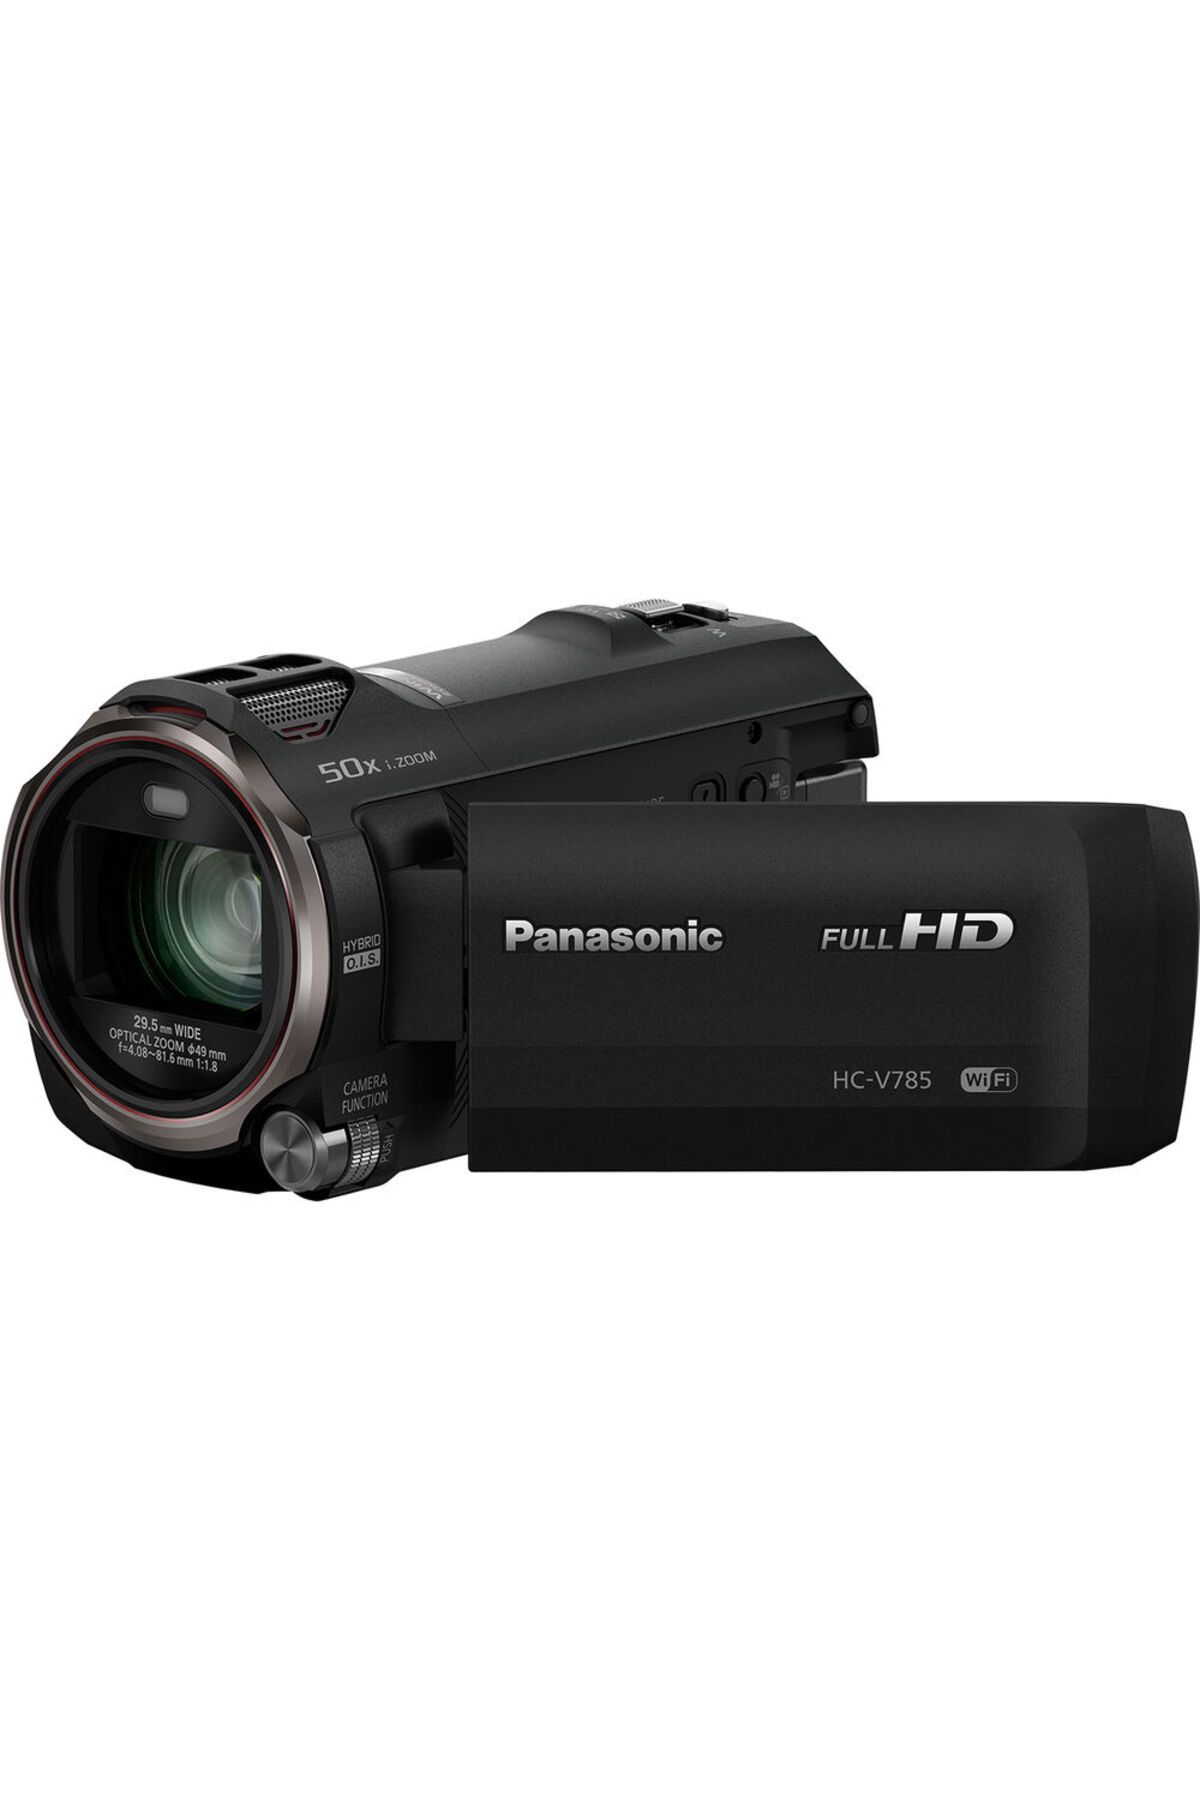 Panasonic Hc-v785 Full Hd Video Kamera